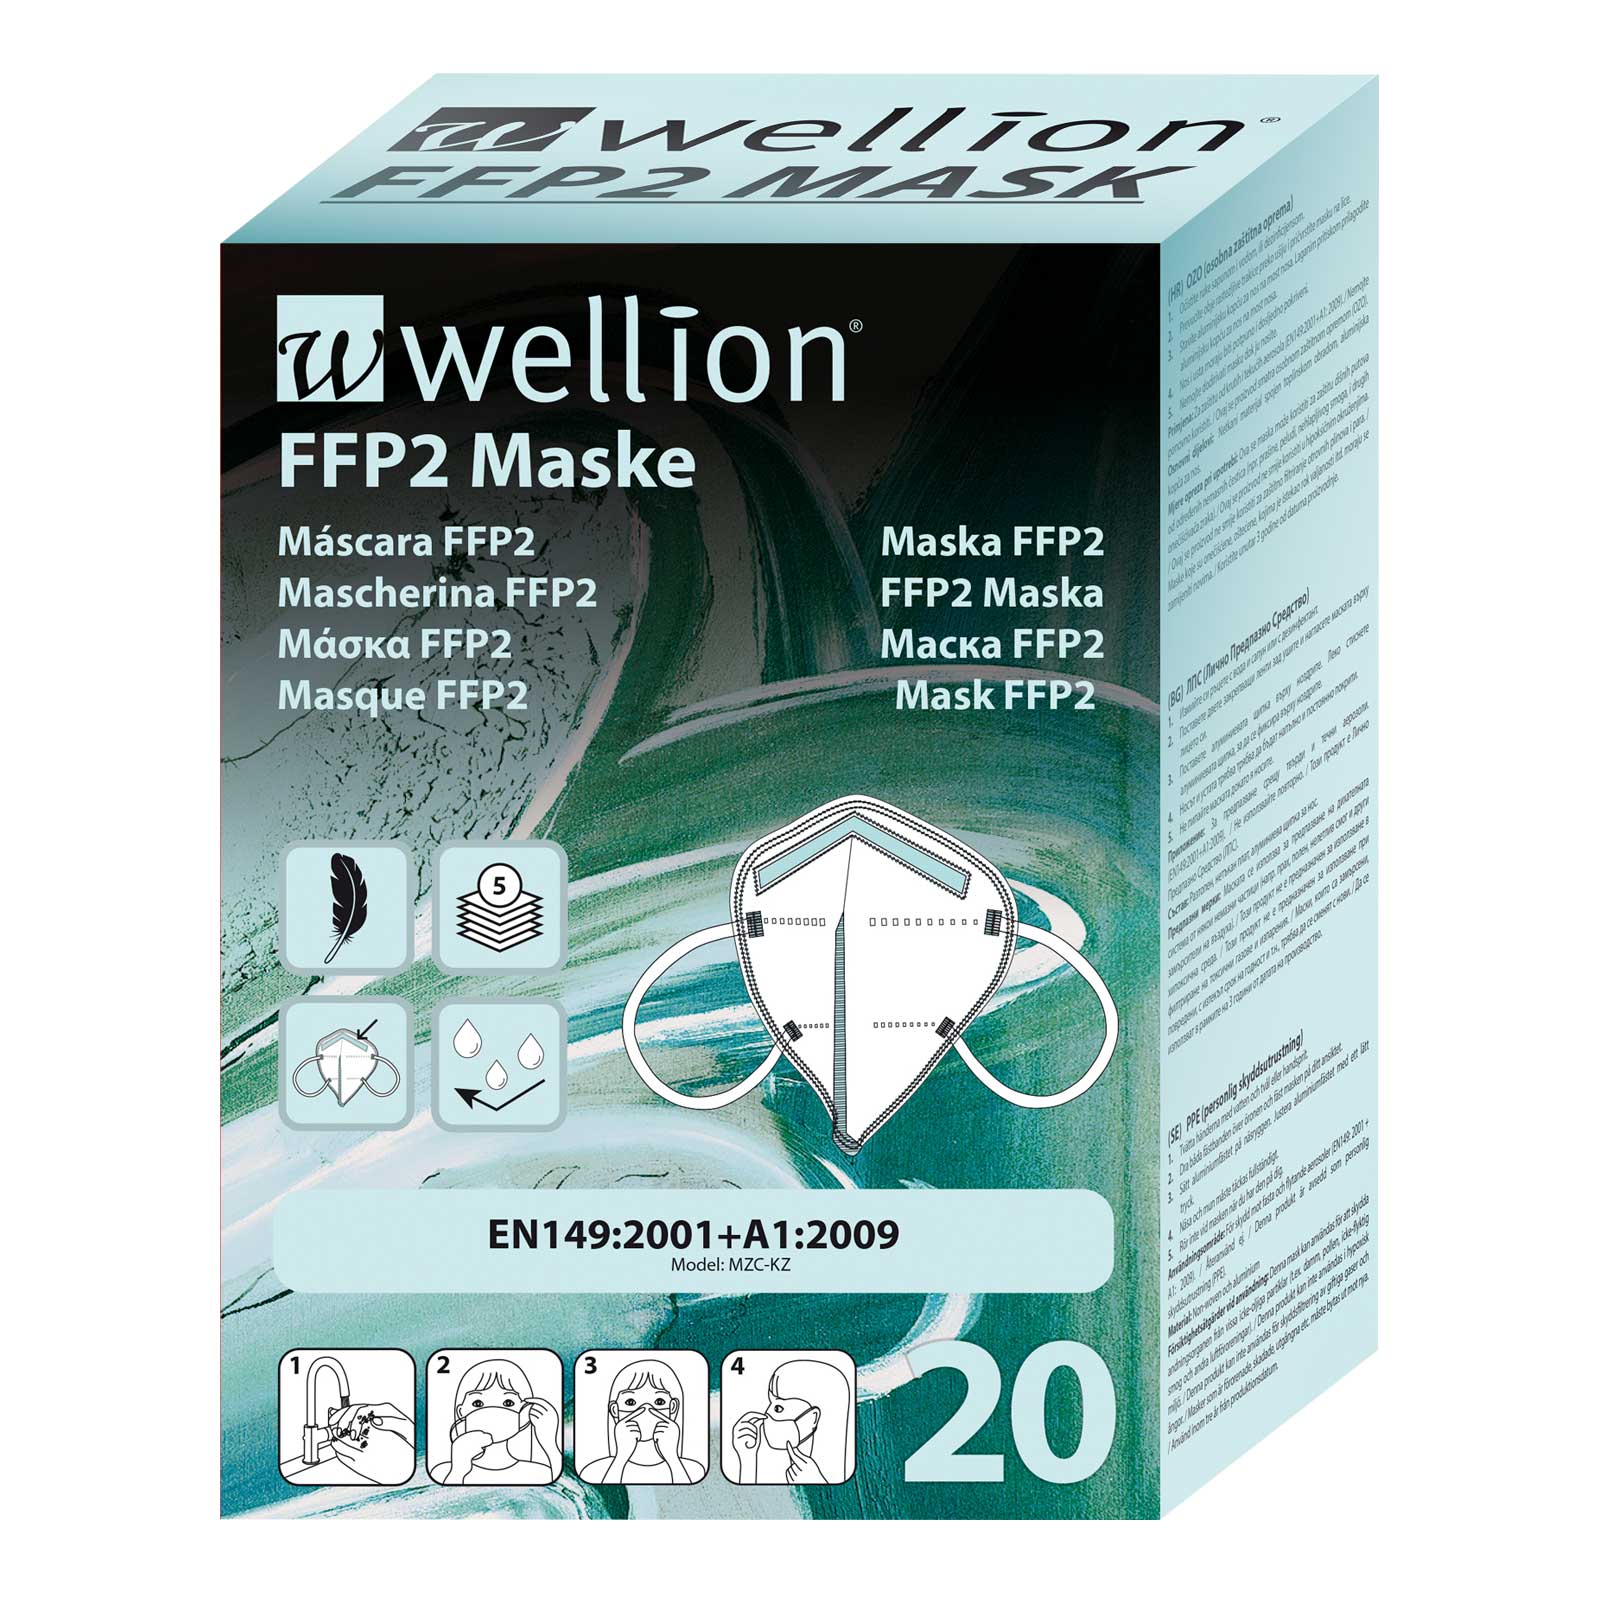 Wellion FFP2 Maske (20 Stk pro Packung)